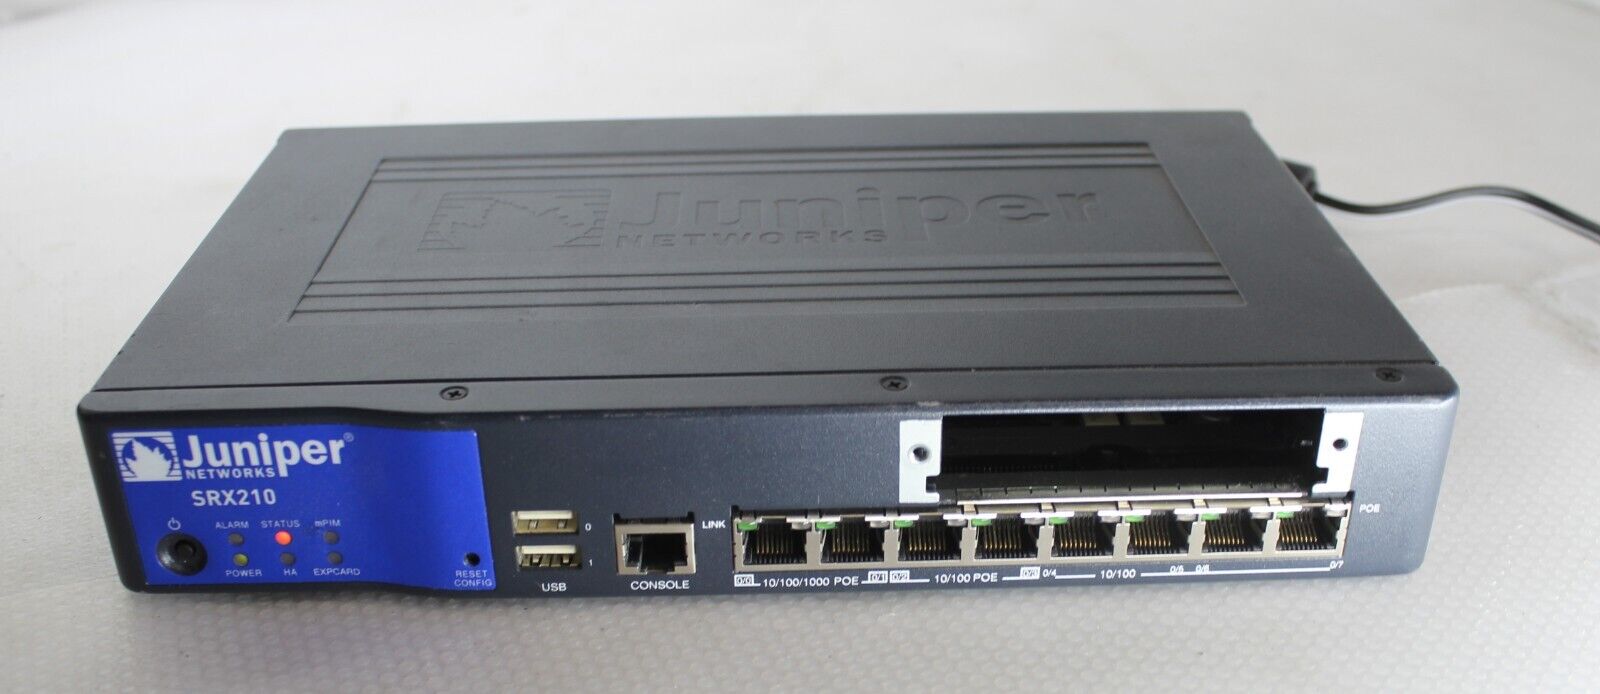 Juniper SRX210 VPN Firewall Security Appliance (SRX210H-POE)